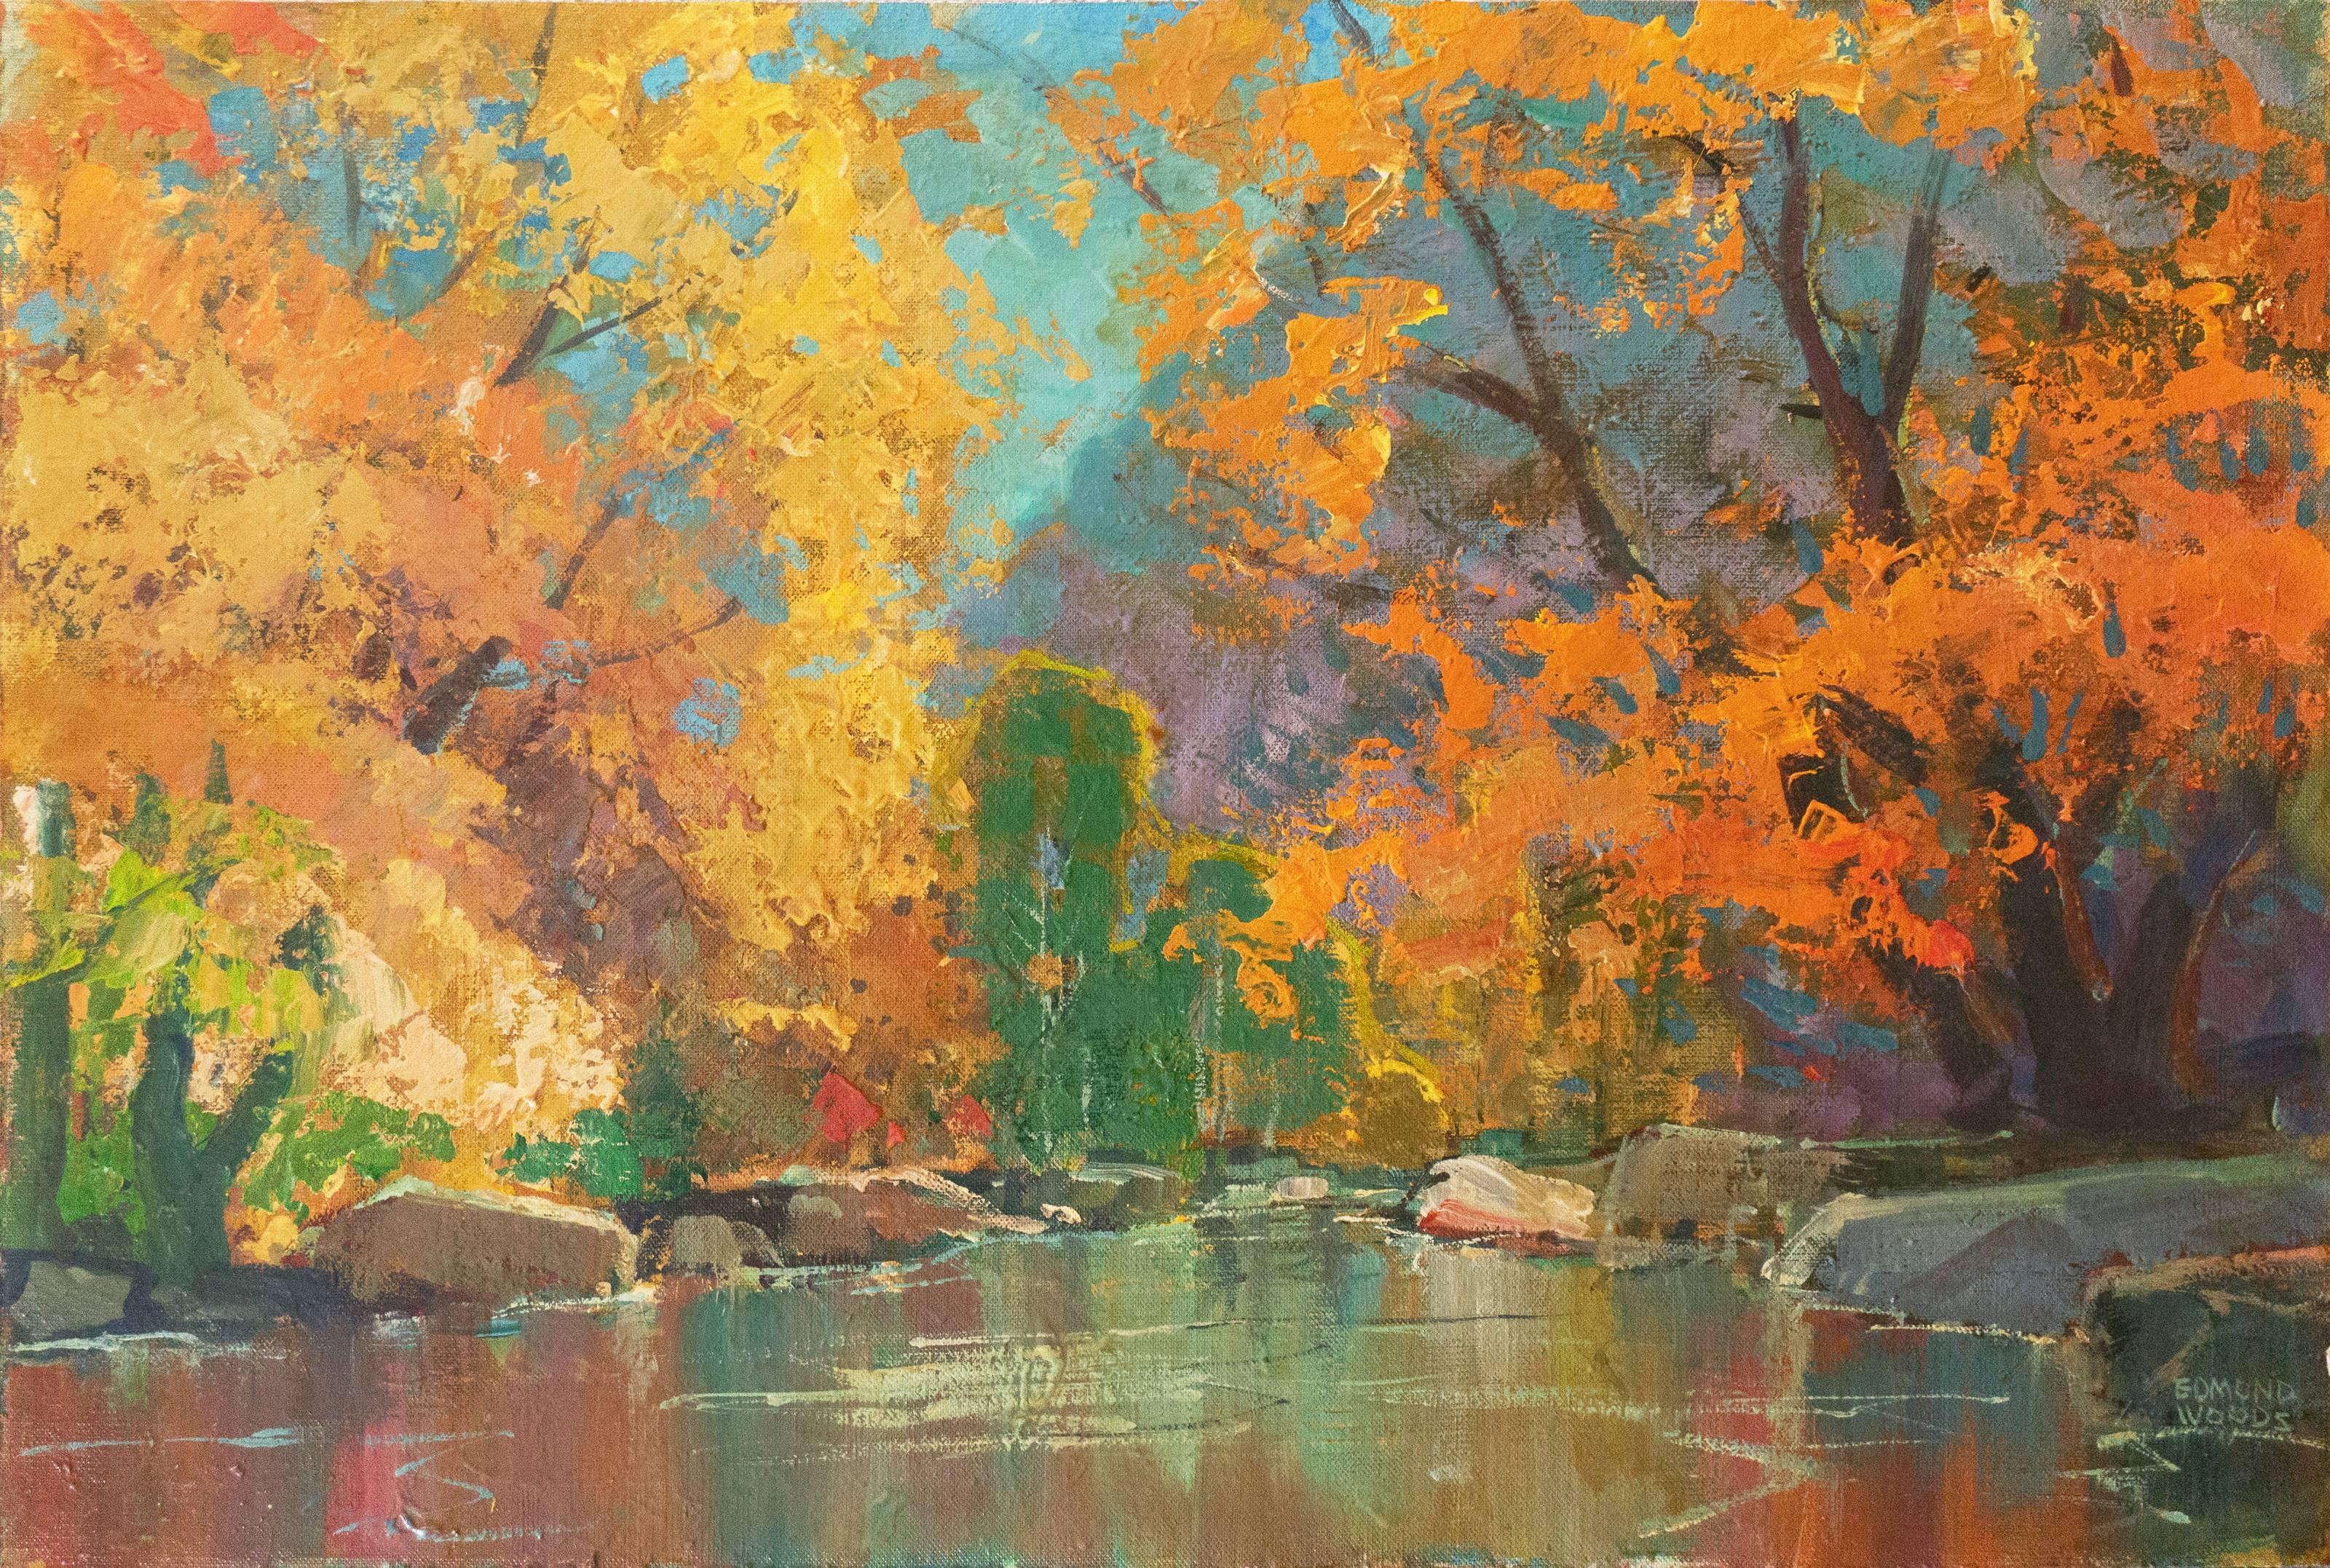 Edmond Woods Landscape Painting - 'Autumn River', Large Oil, San Diego, California Artist, Chouinard Art Institute